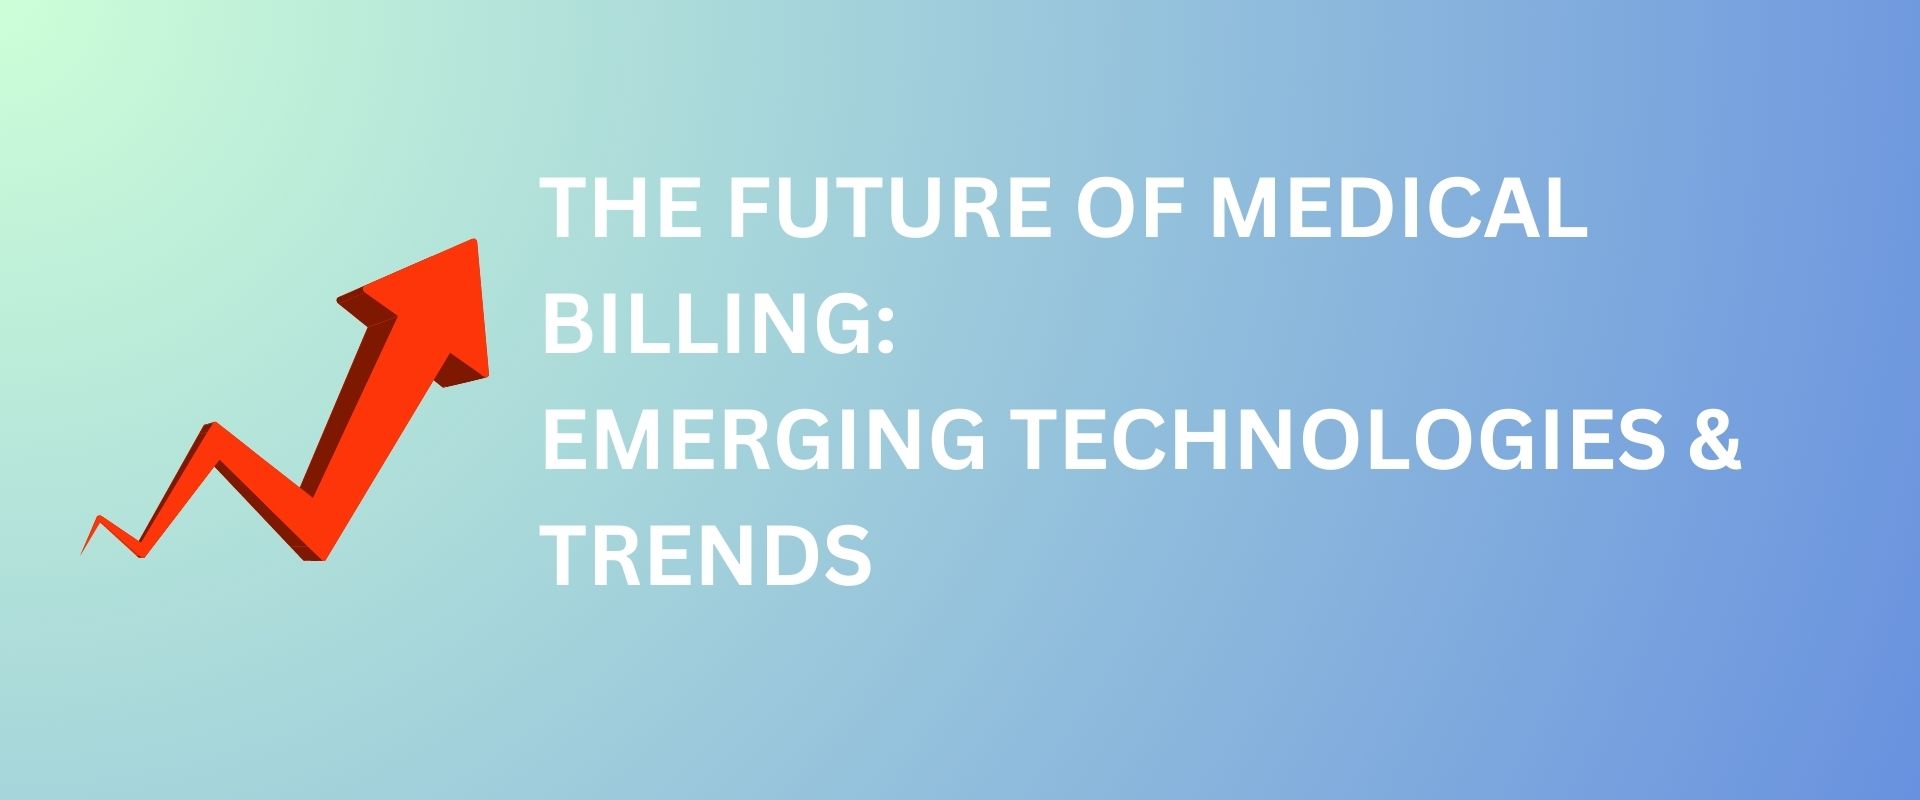 future of medical billing